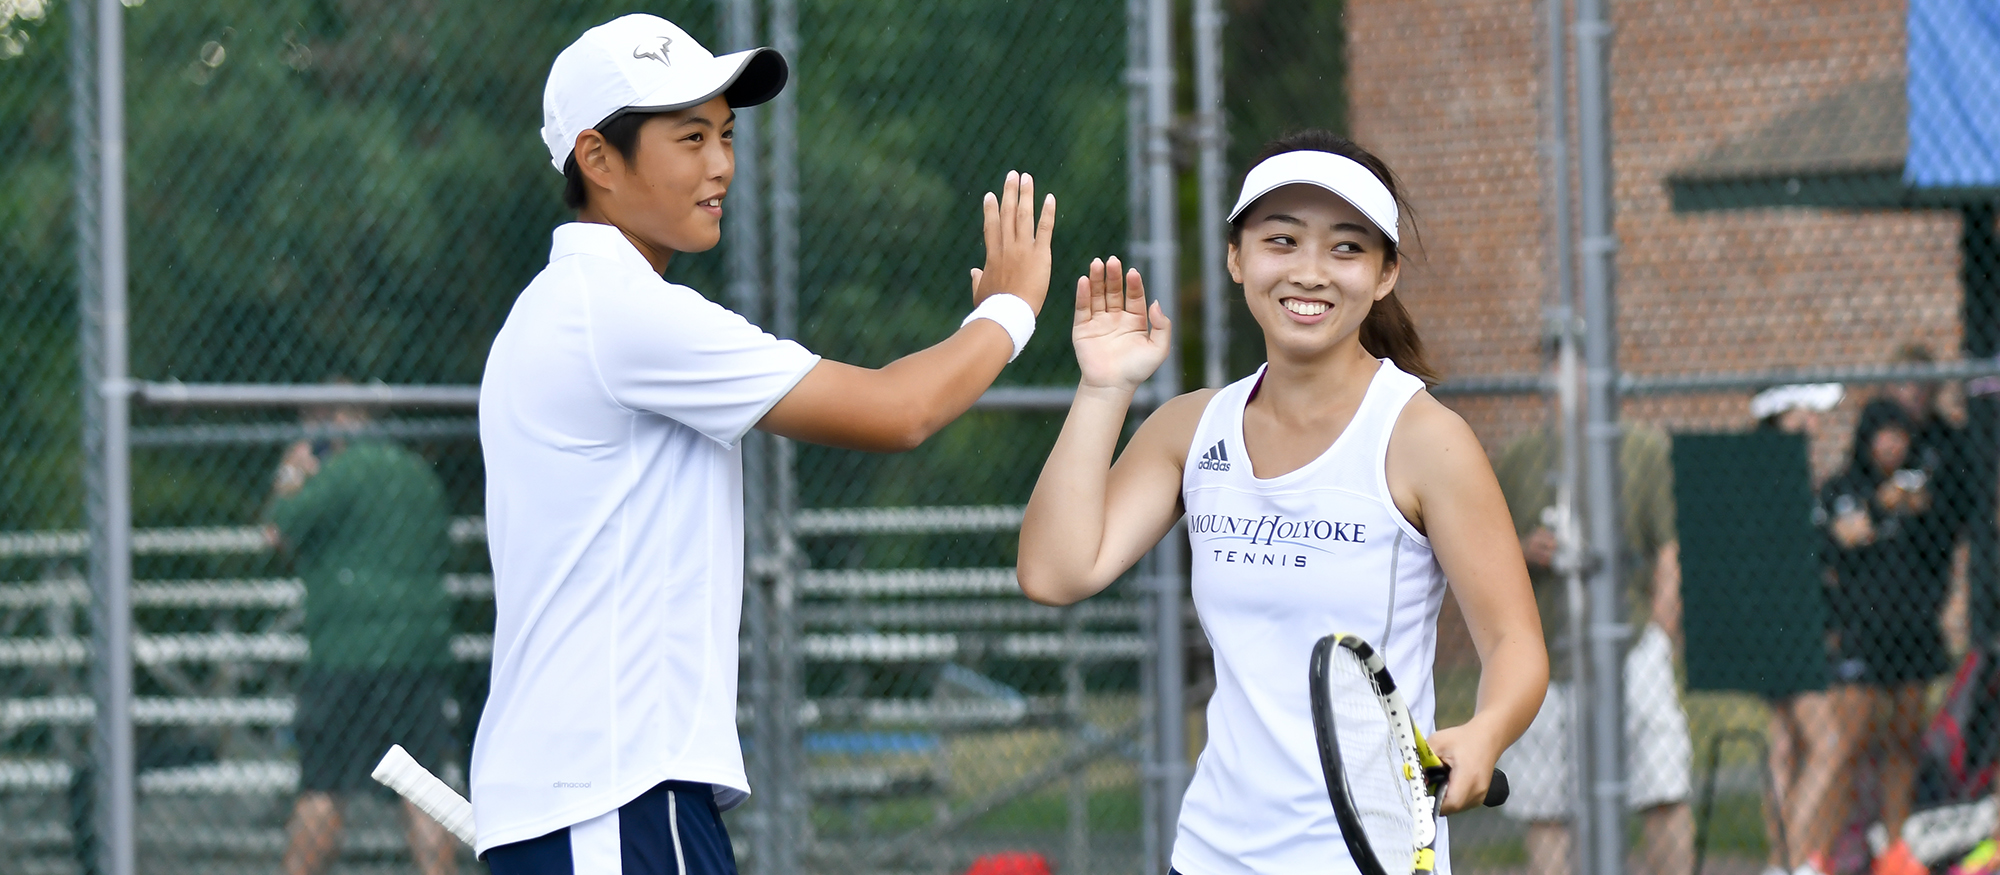 Action photo of Lyons tennis players Ching-Ching Huang (left) and Ayame Yazawa (right).